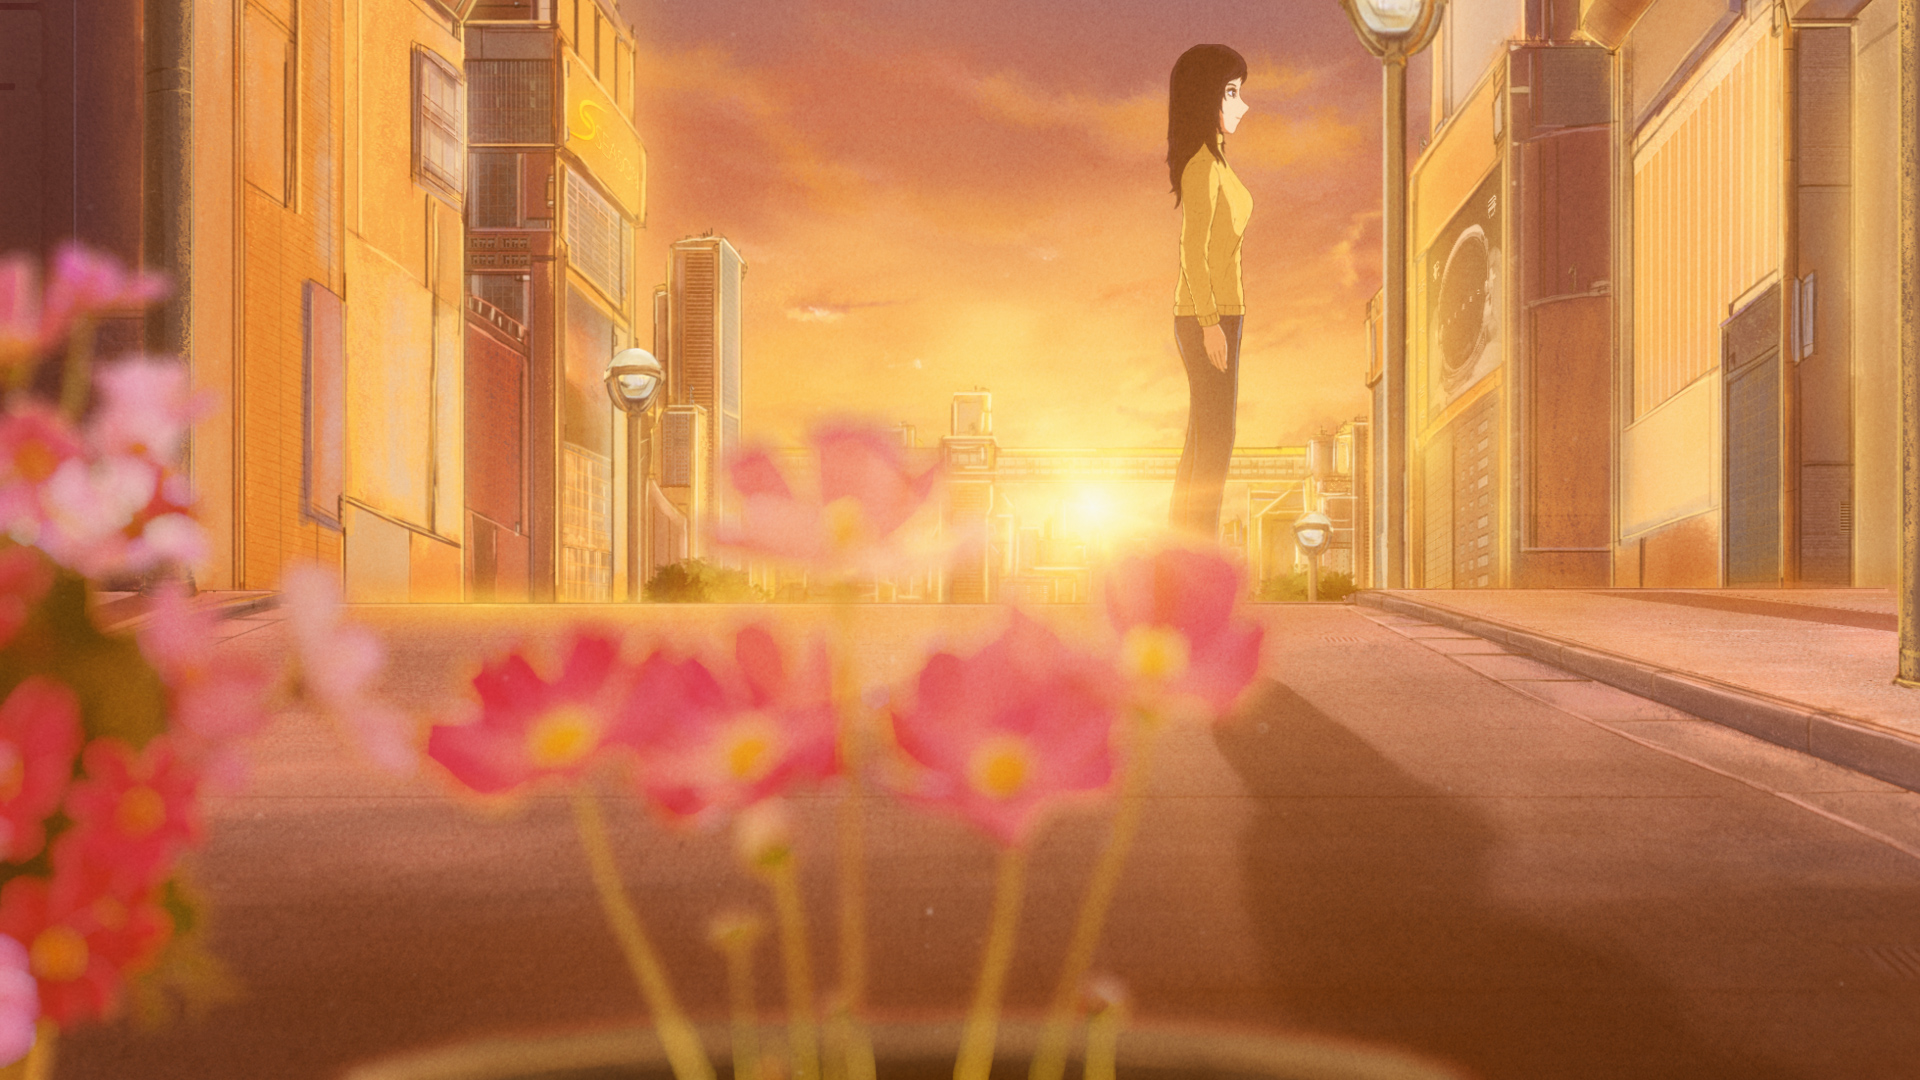 Outdoors Digital Art Anime City City Sunset Glow Sky Anime Flowers Building Cityscape Anime Girls Su 1920x1080